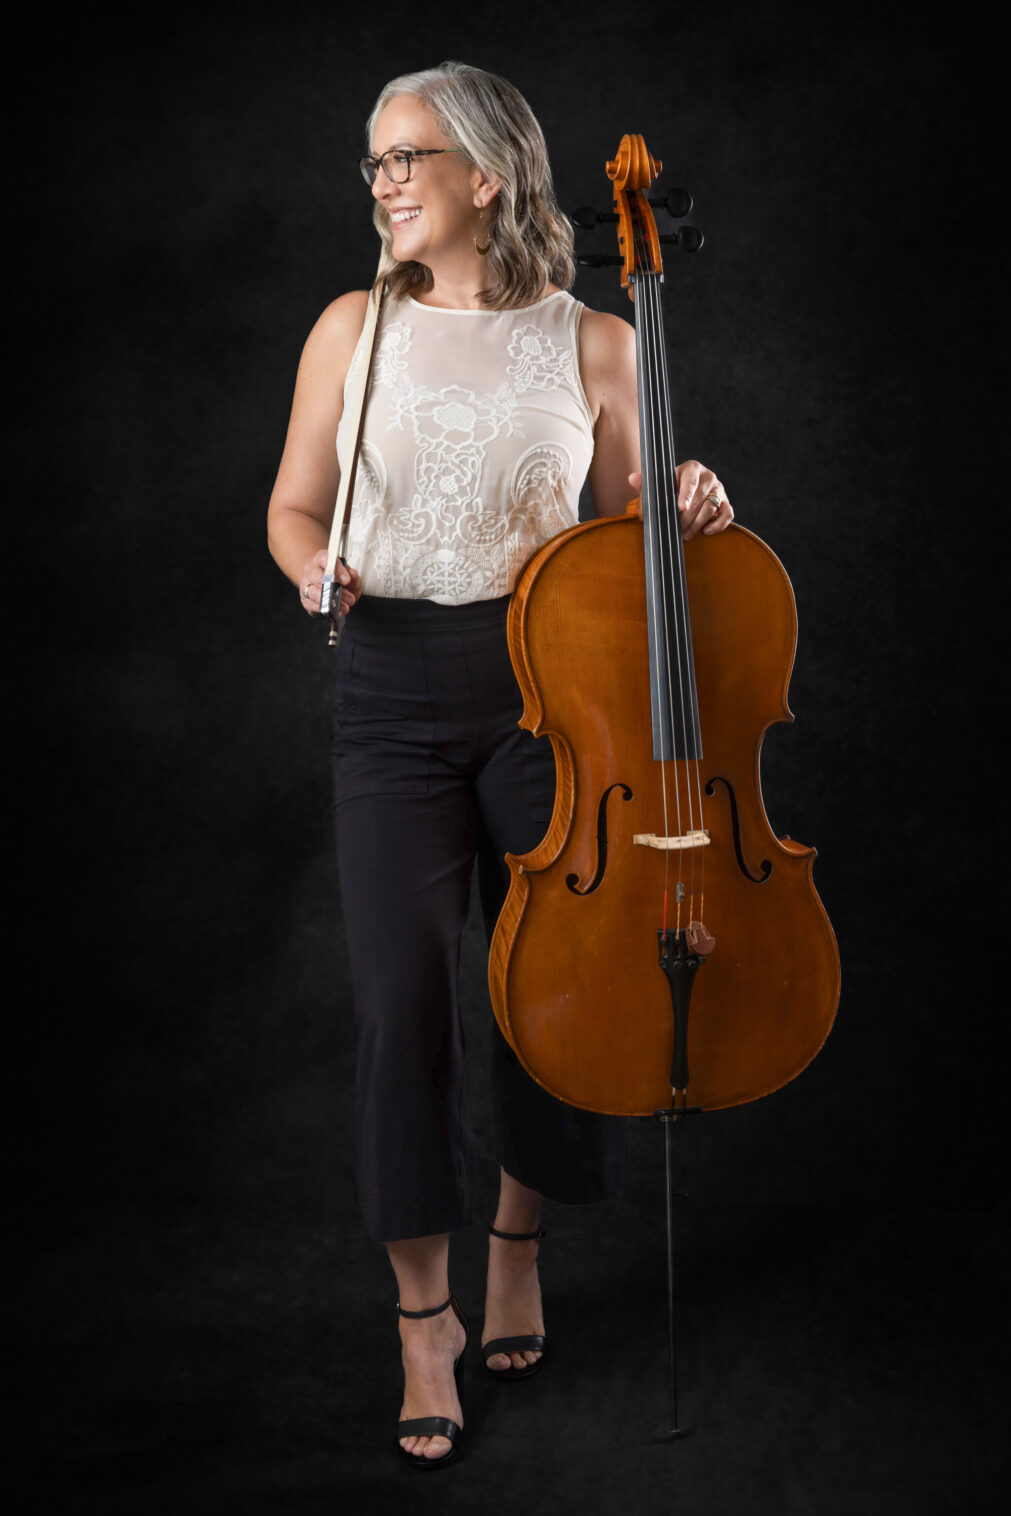 Cellist photo idea